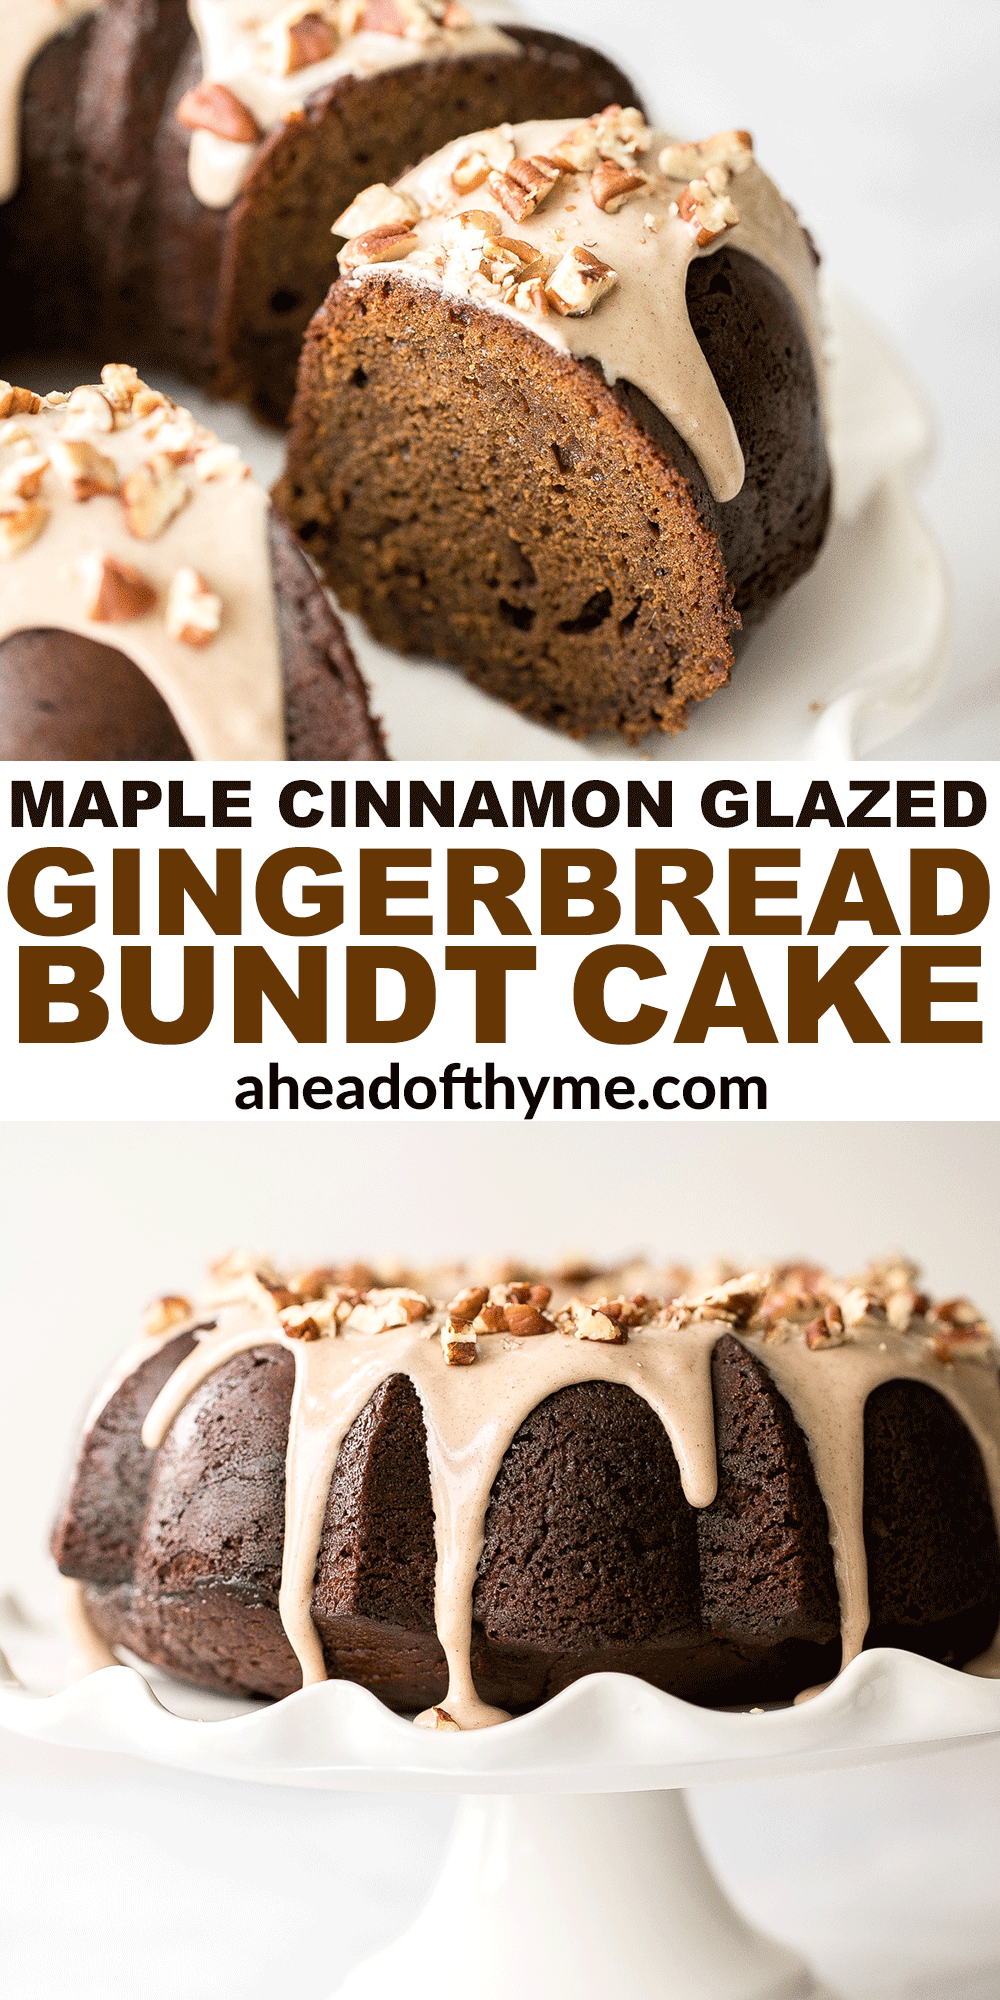 Gingerbread Bundt Cake with Maple Cinnamon Glaze